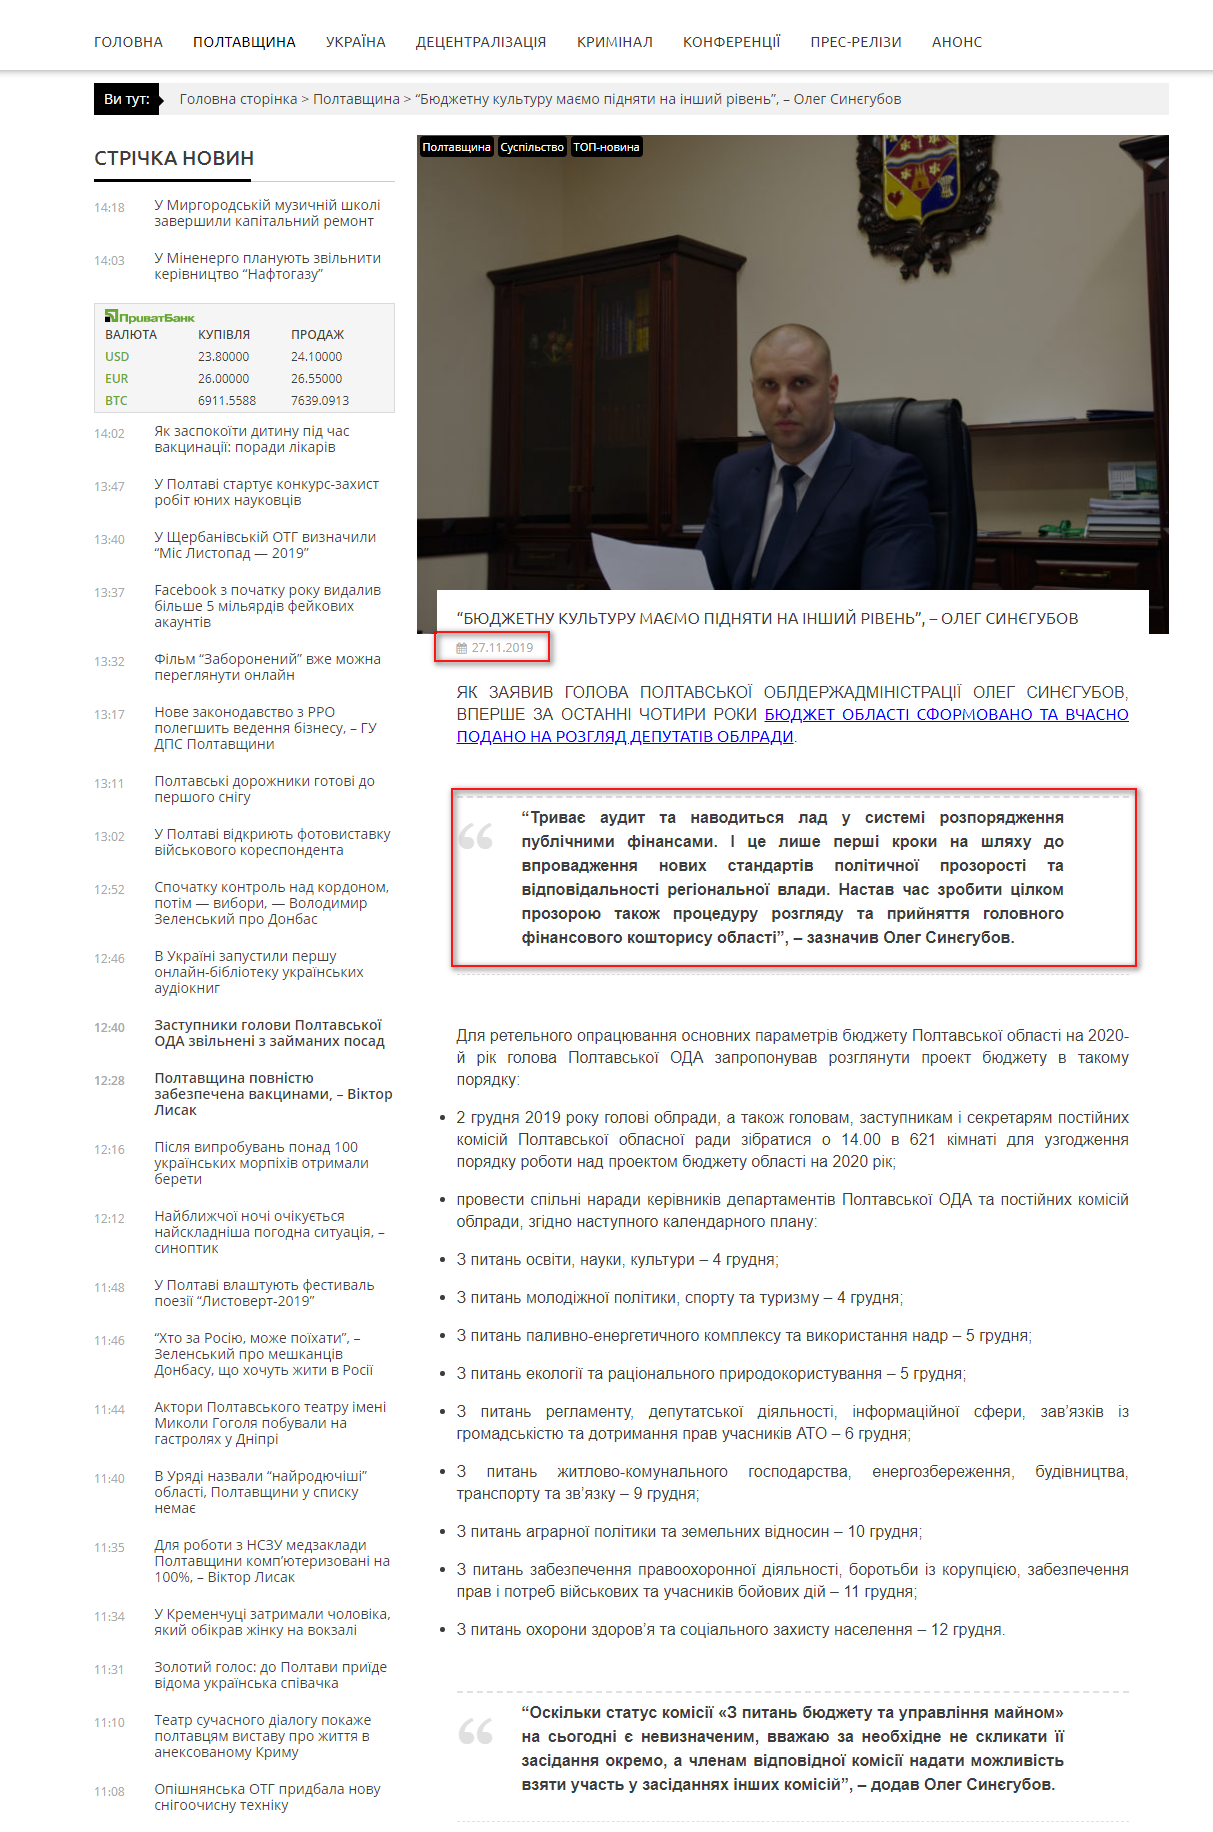 http://loga.gov.ua/oda/press/news?page=1